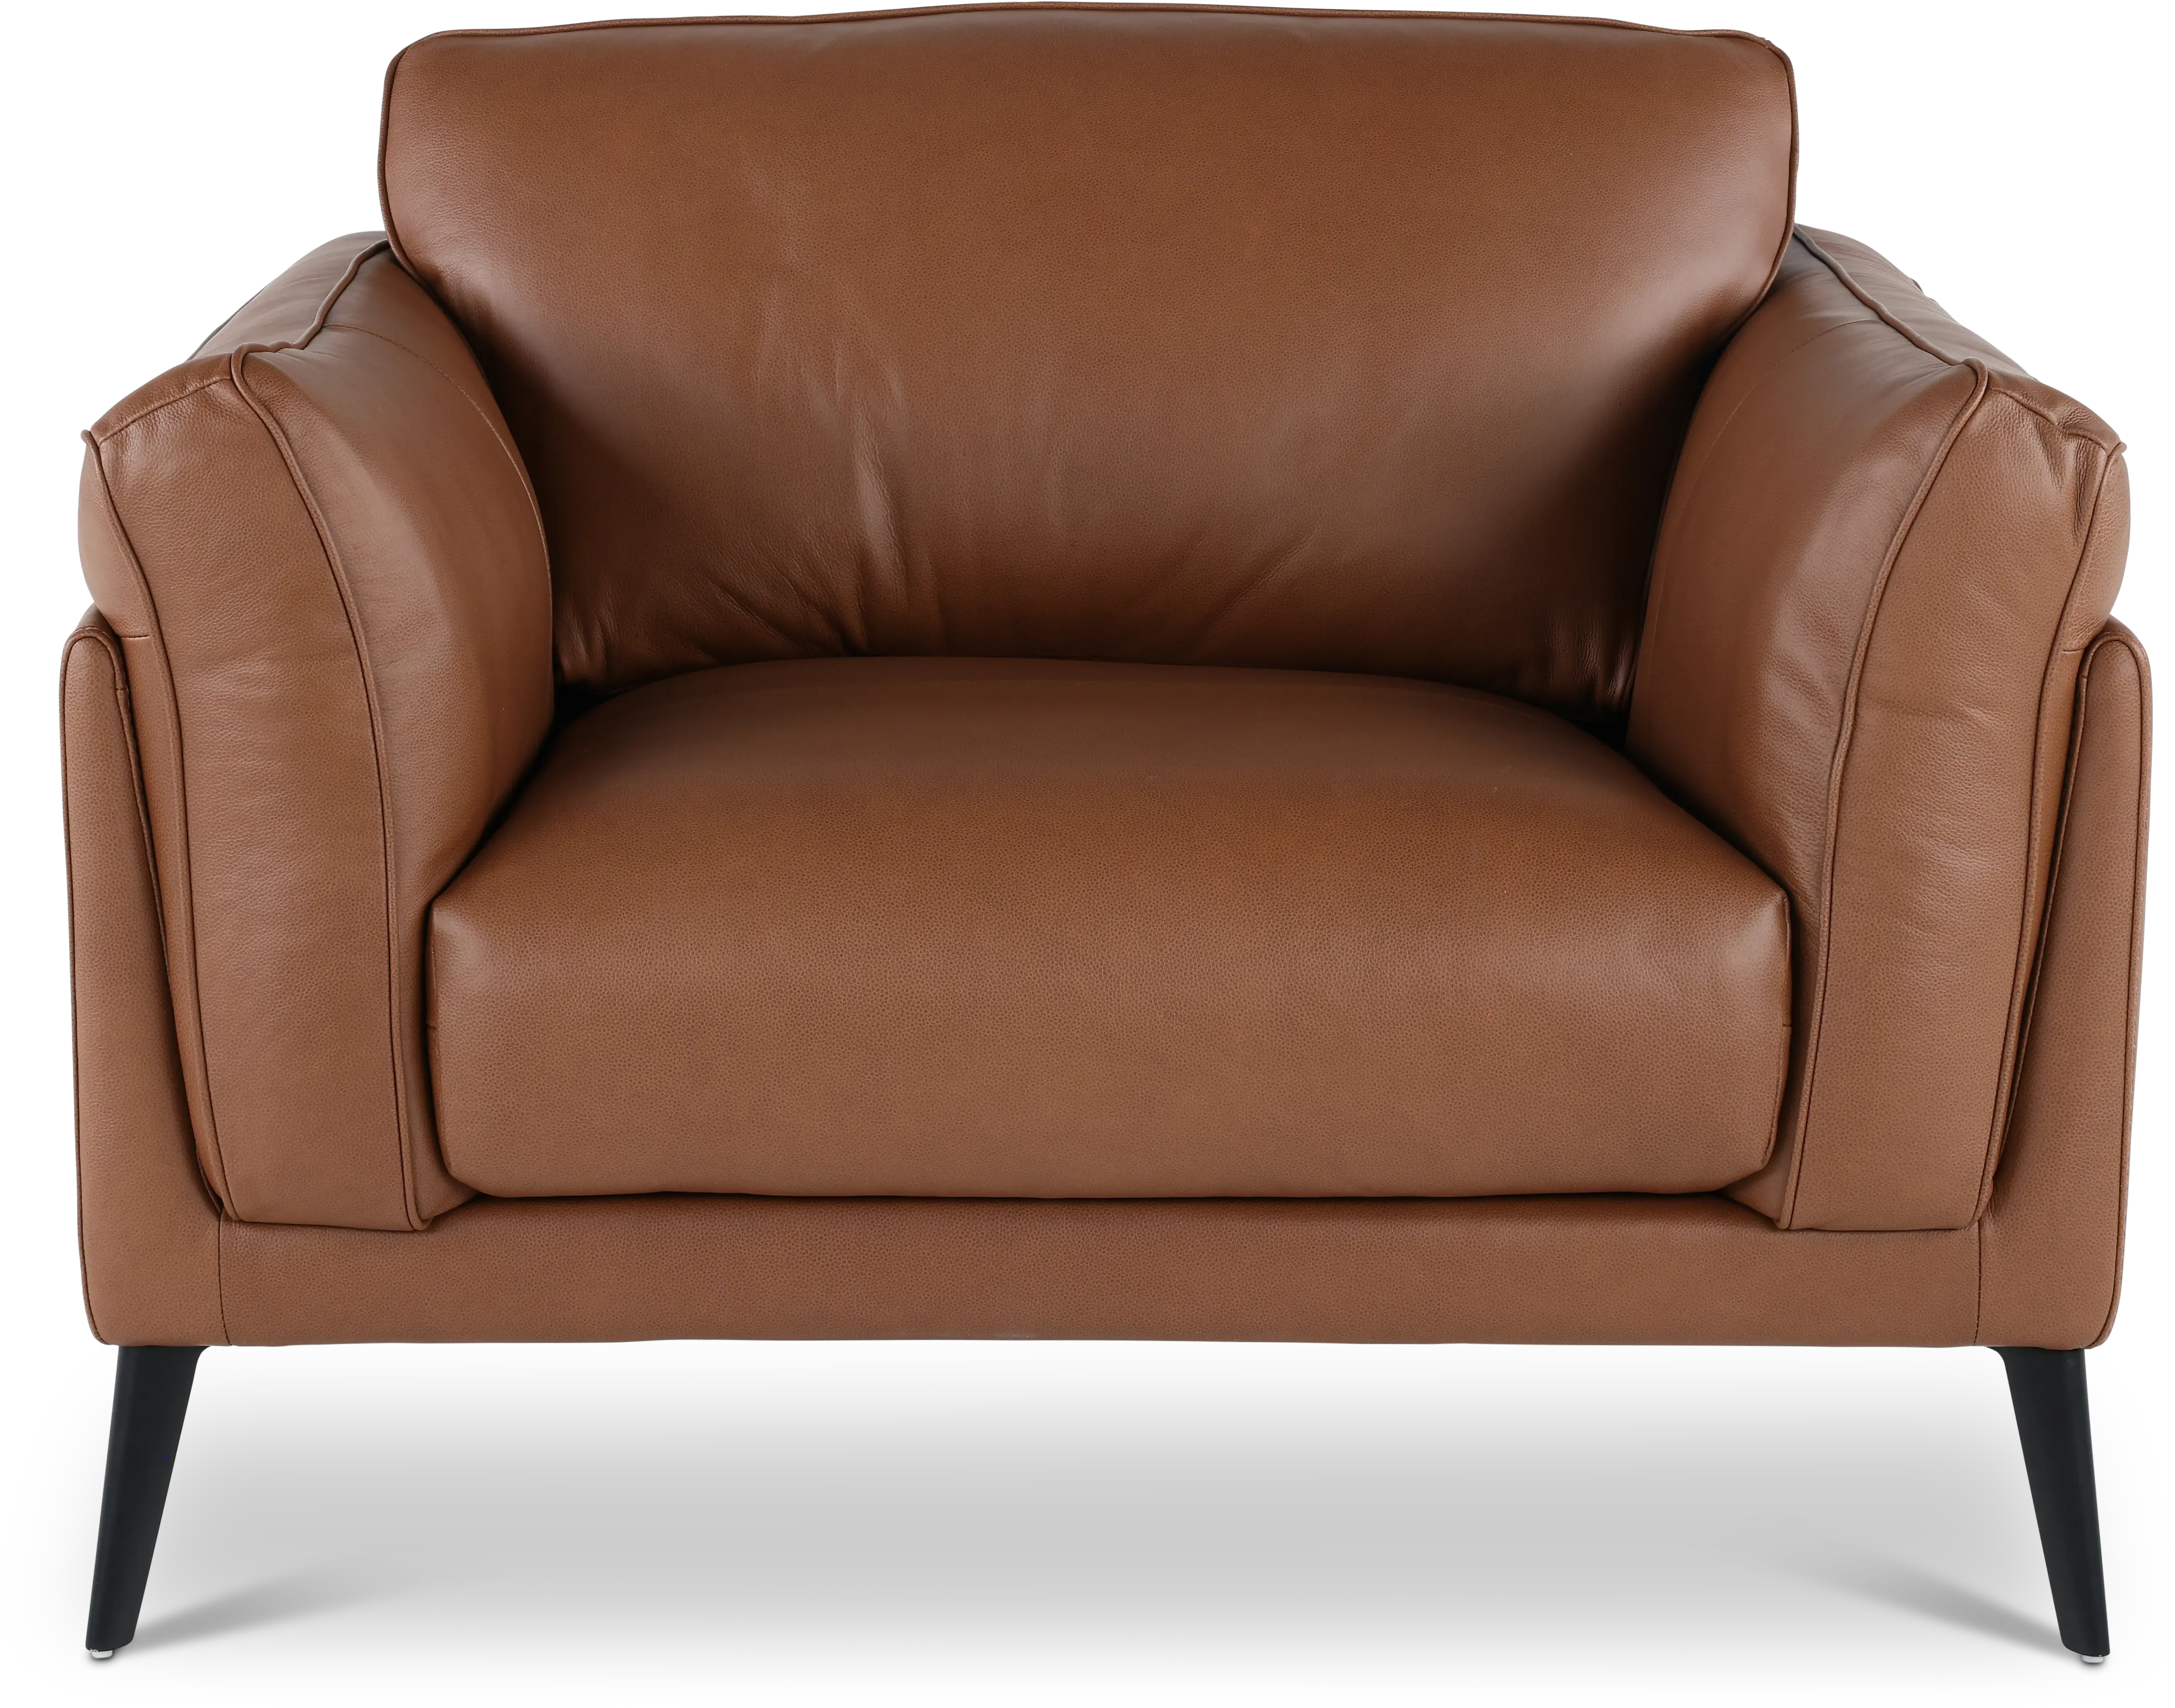 Paris Brown Leather Chair